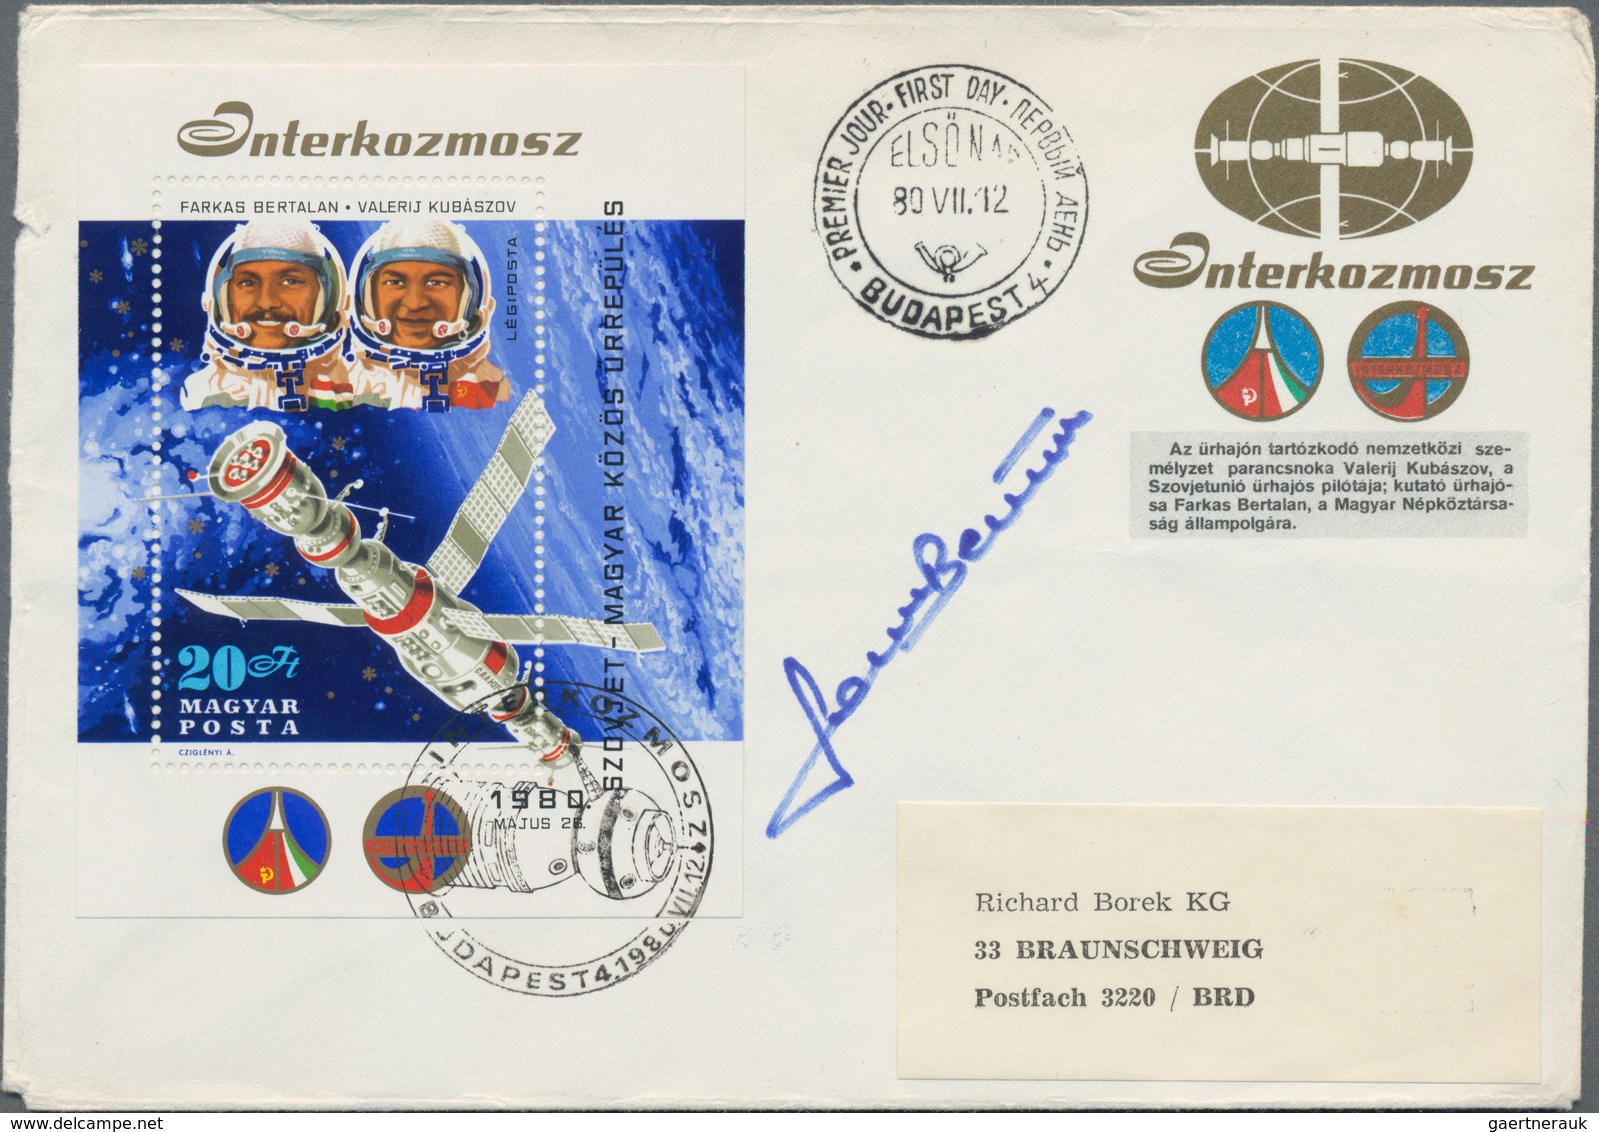 Thematik: Raumfahrt / astronautics: 1980/2015 (ca.), SIGNATURES of Astronauts/Cosmonauts, assortment